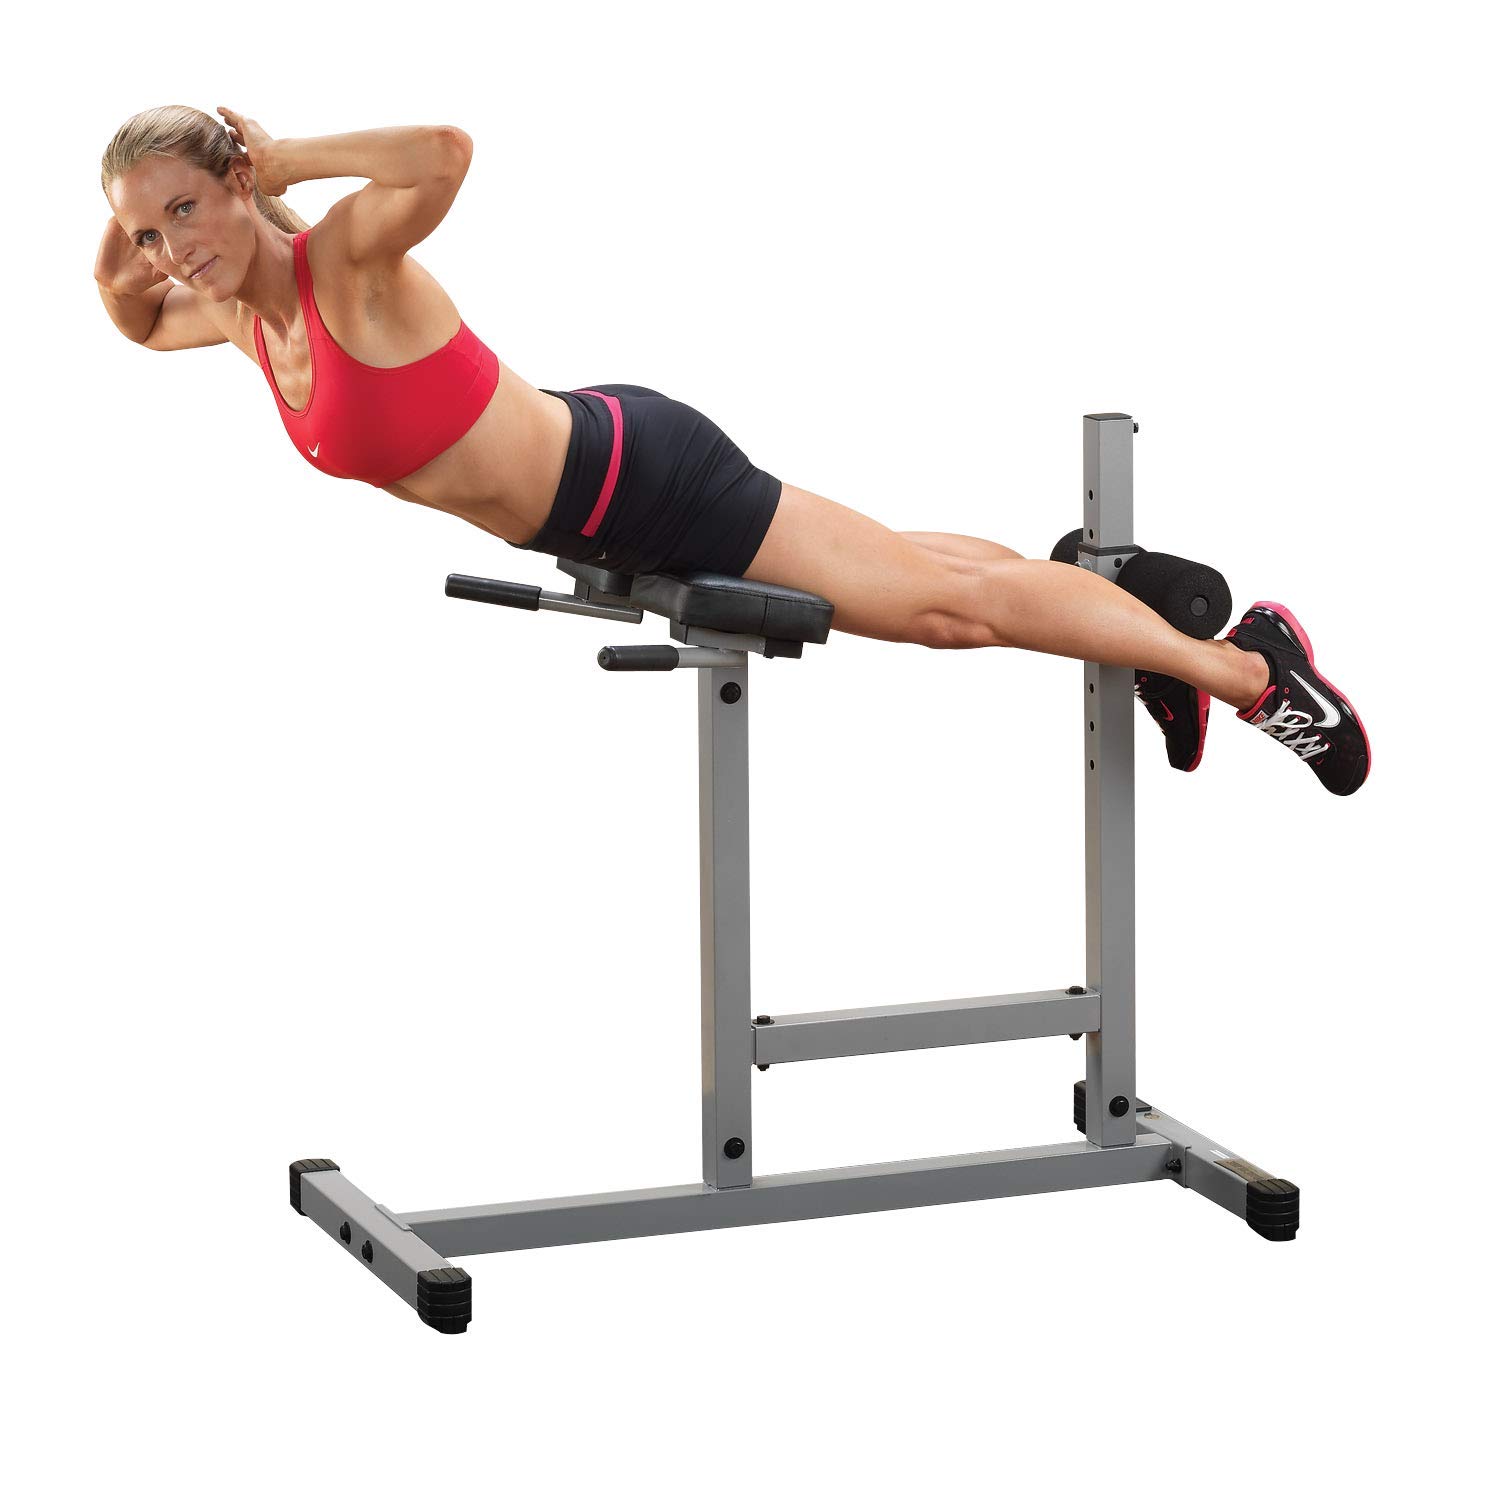 BODY-SOLID Powerline-Serie Rückentrainer Rückenstrecker Roman Chair Hyperextension Bauchtrainer Trainingsgerät